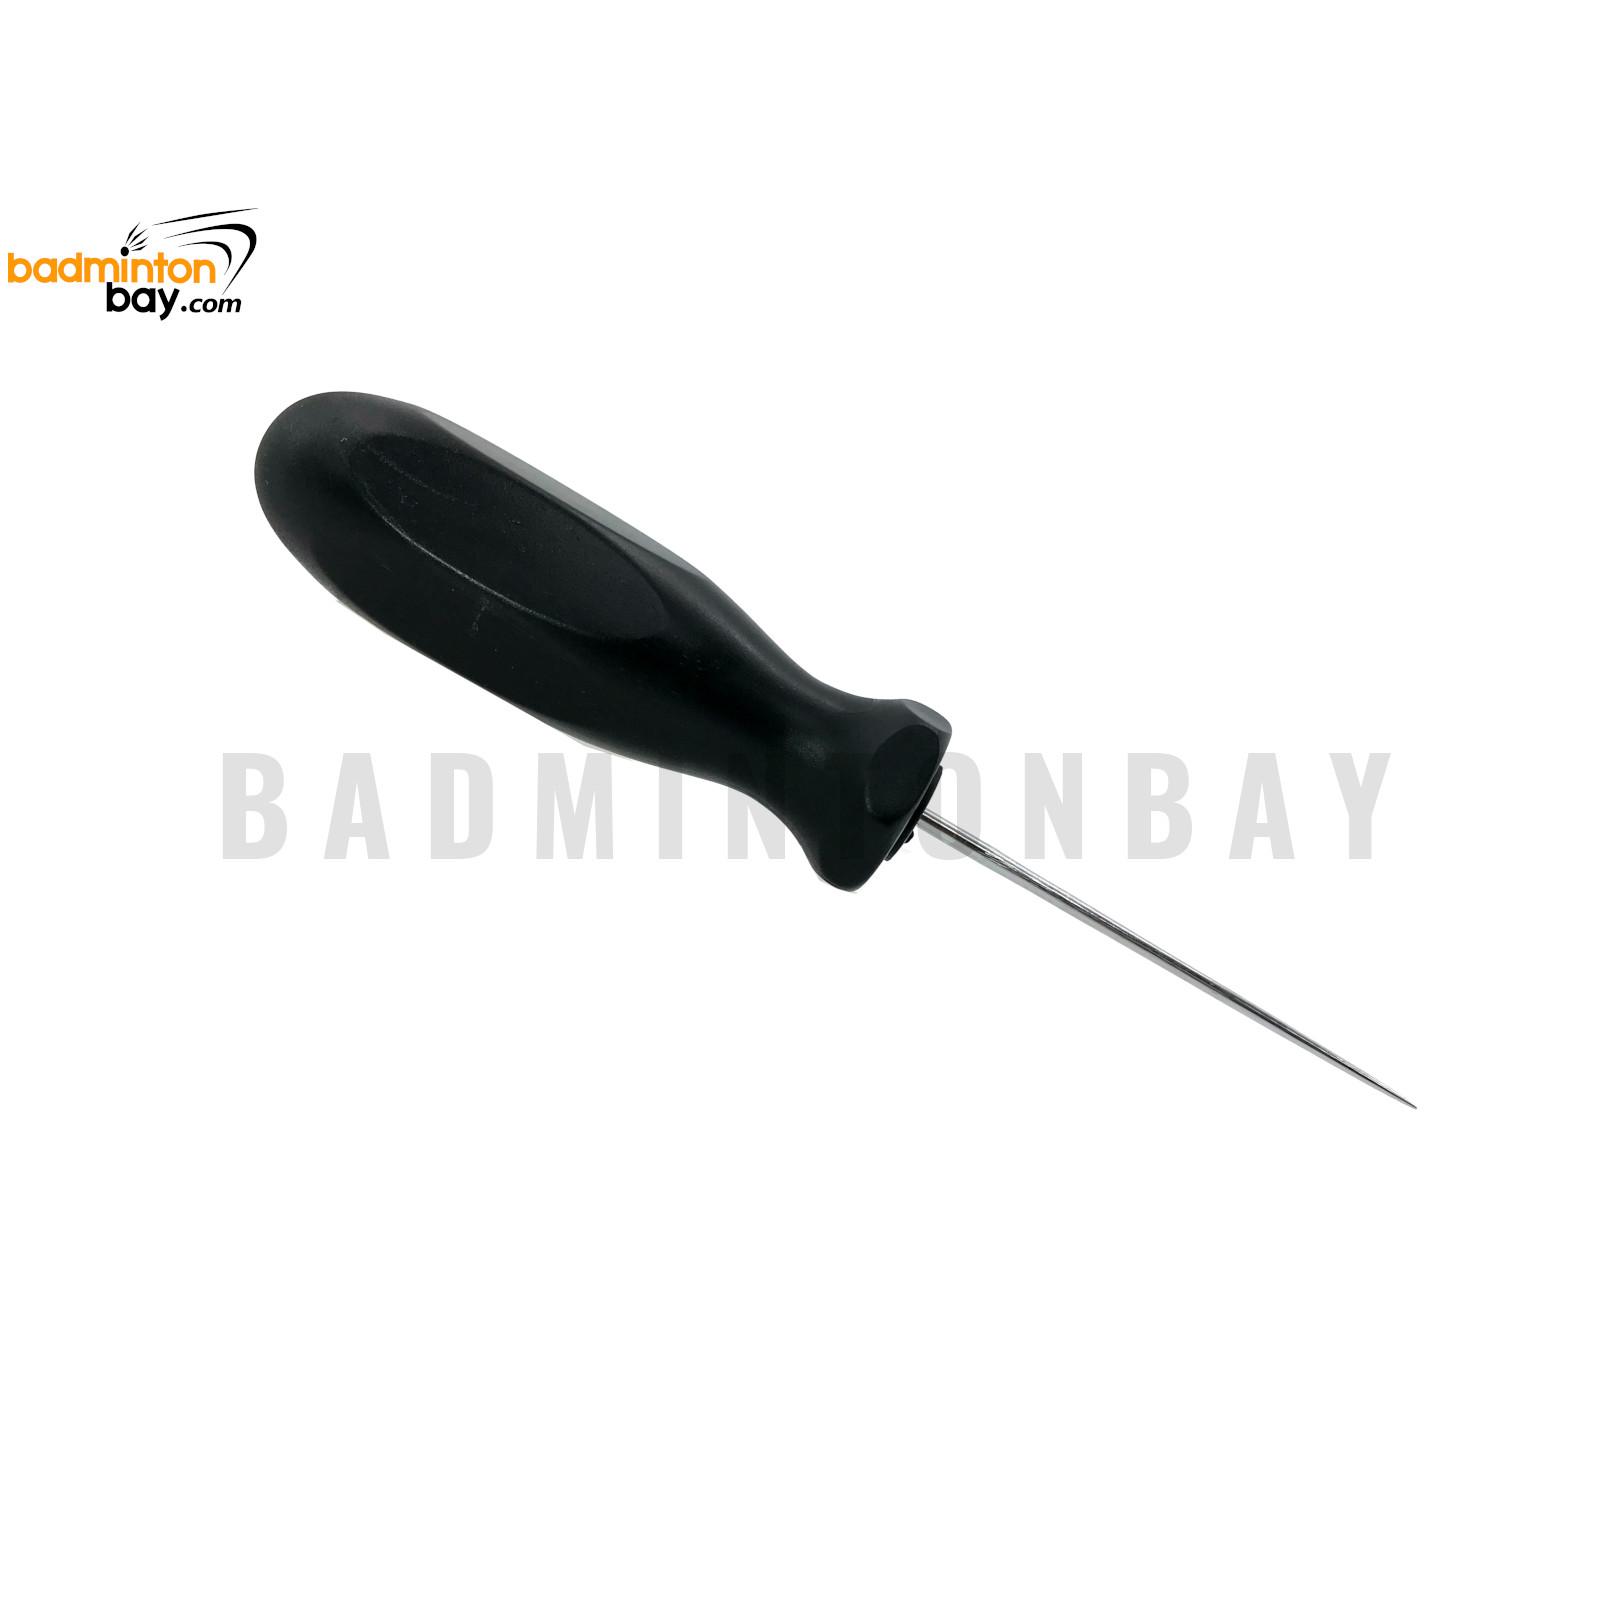 Grommet Remover Grinder Drill Awl Stringing Tool for Badminton Tennis Racket 